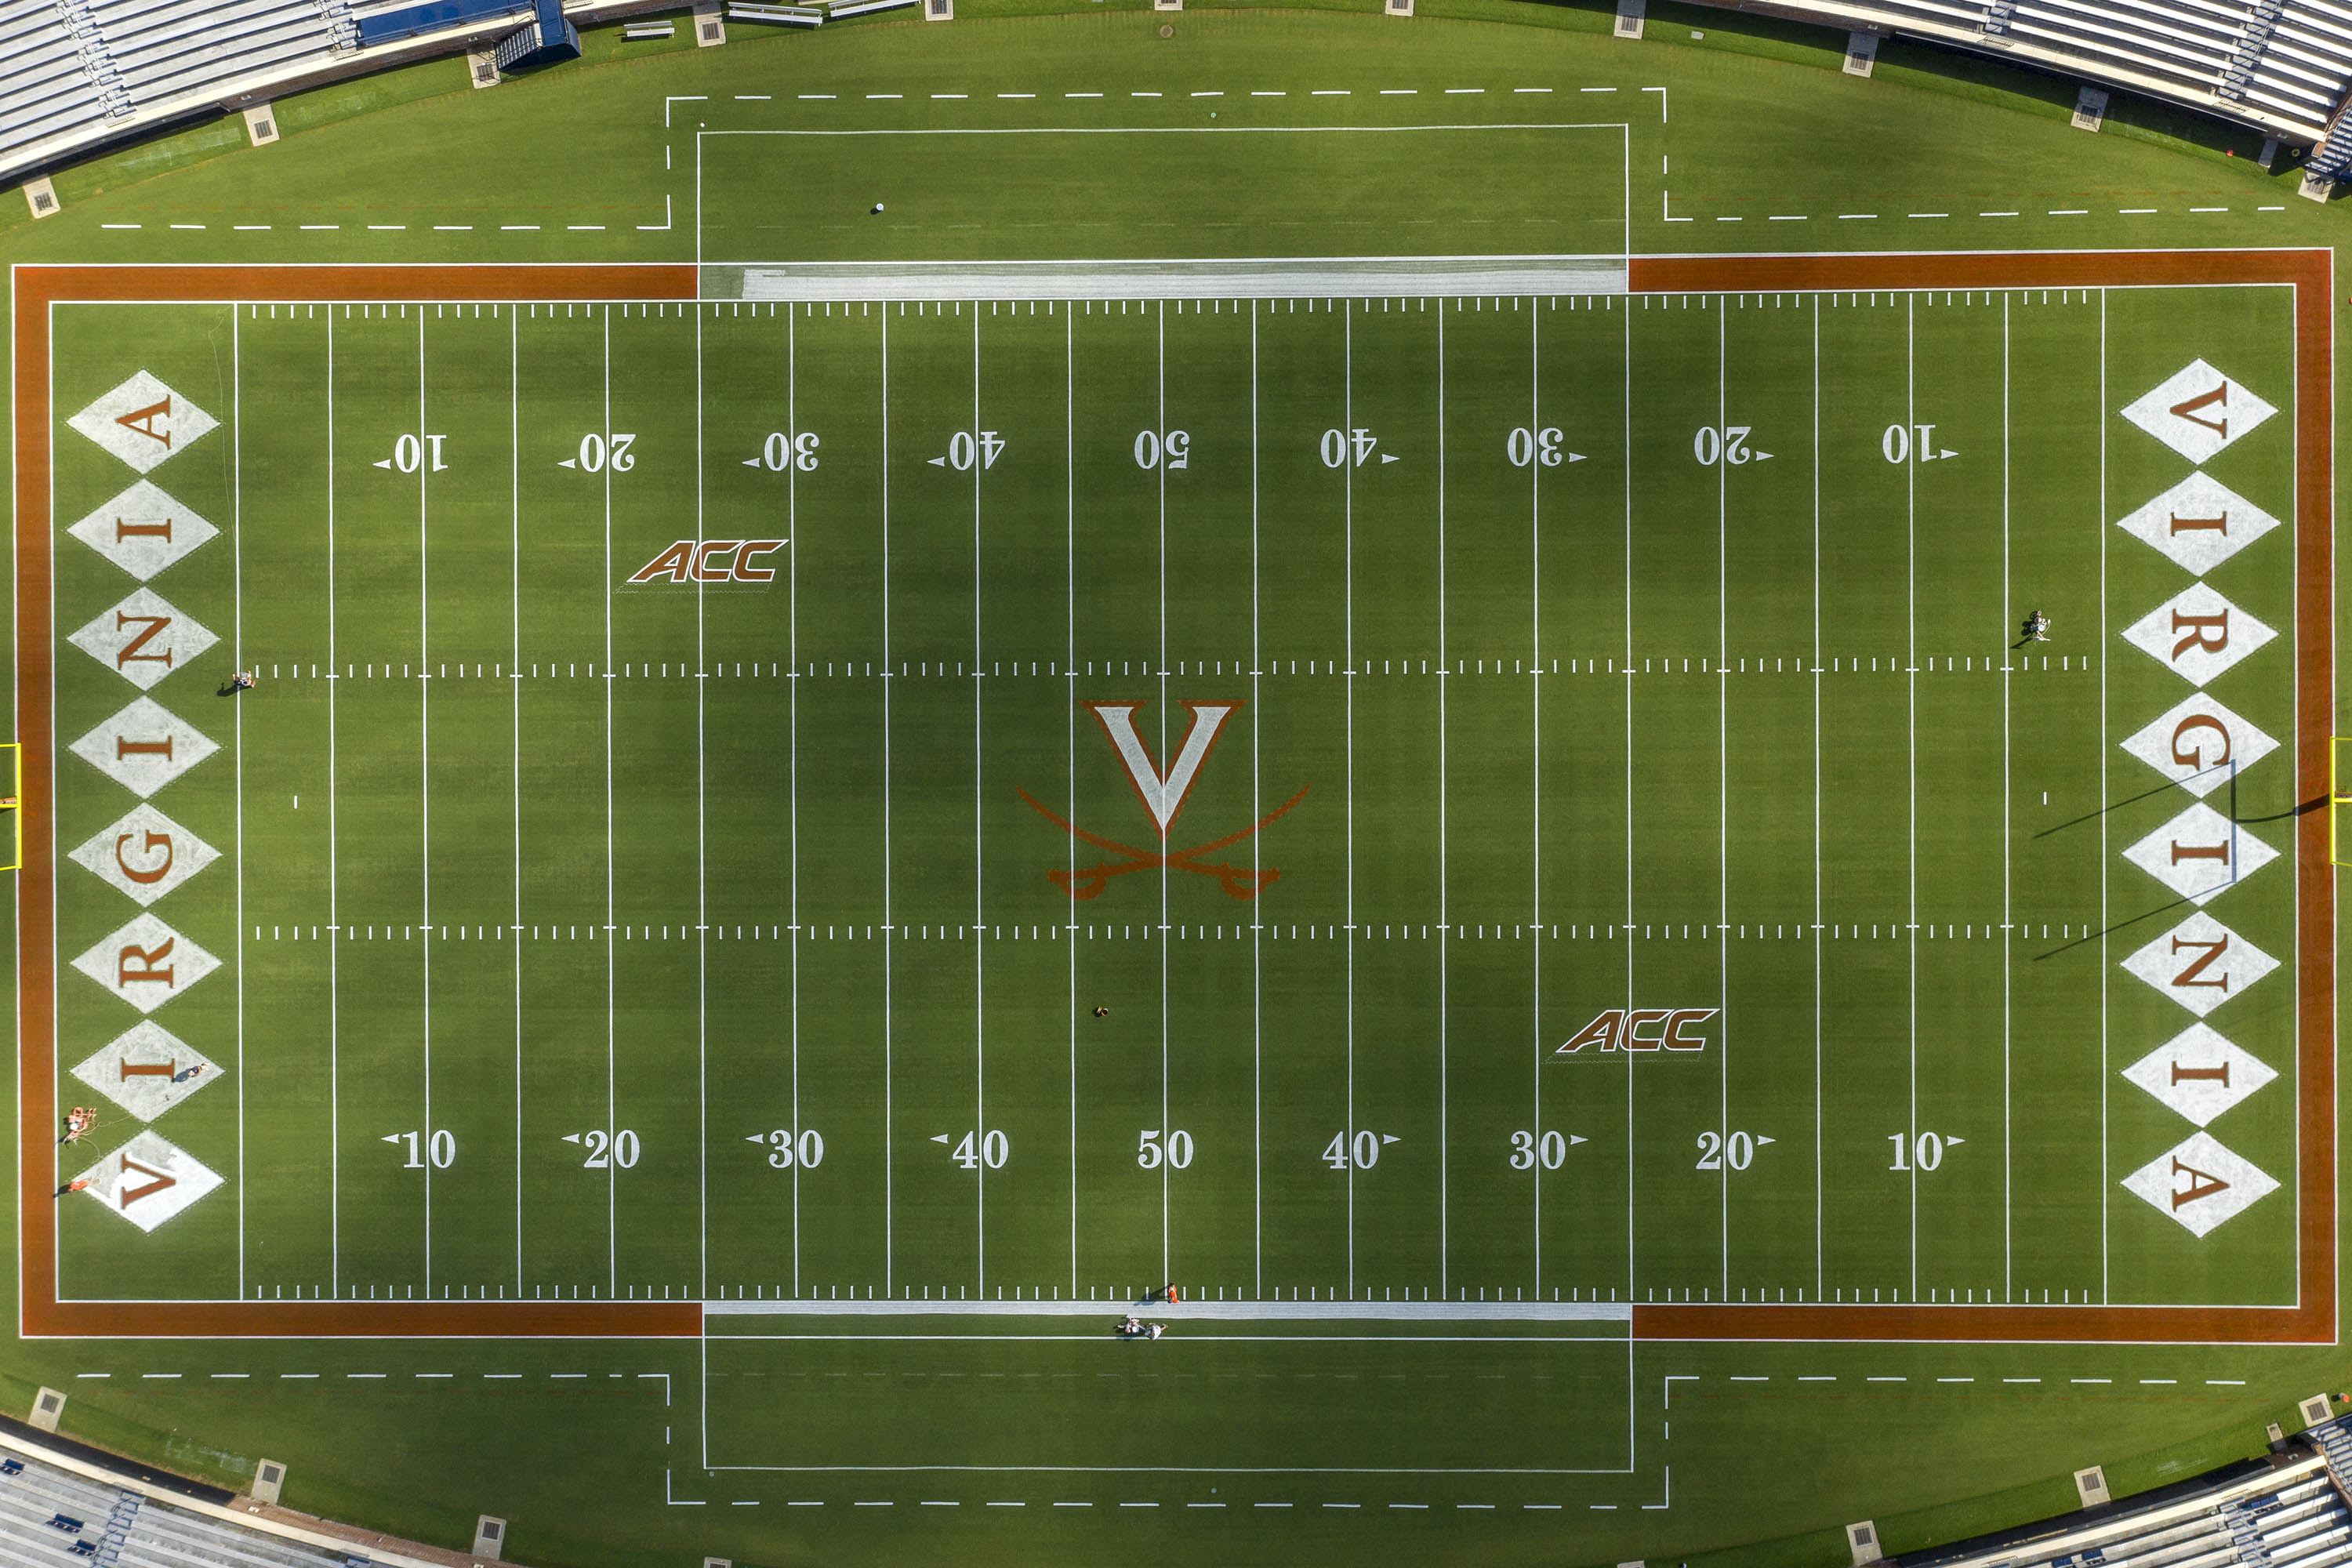 Aerial view of the UVA football field at Scott Stadium